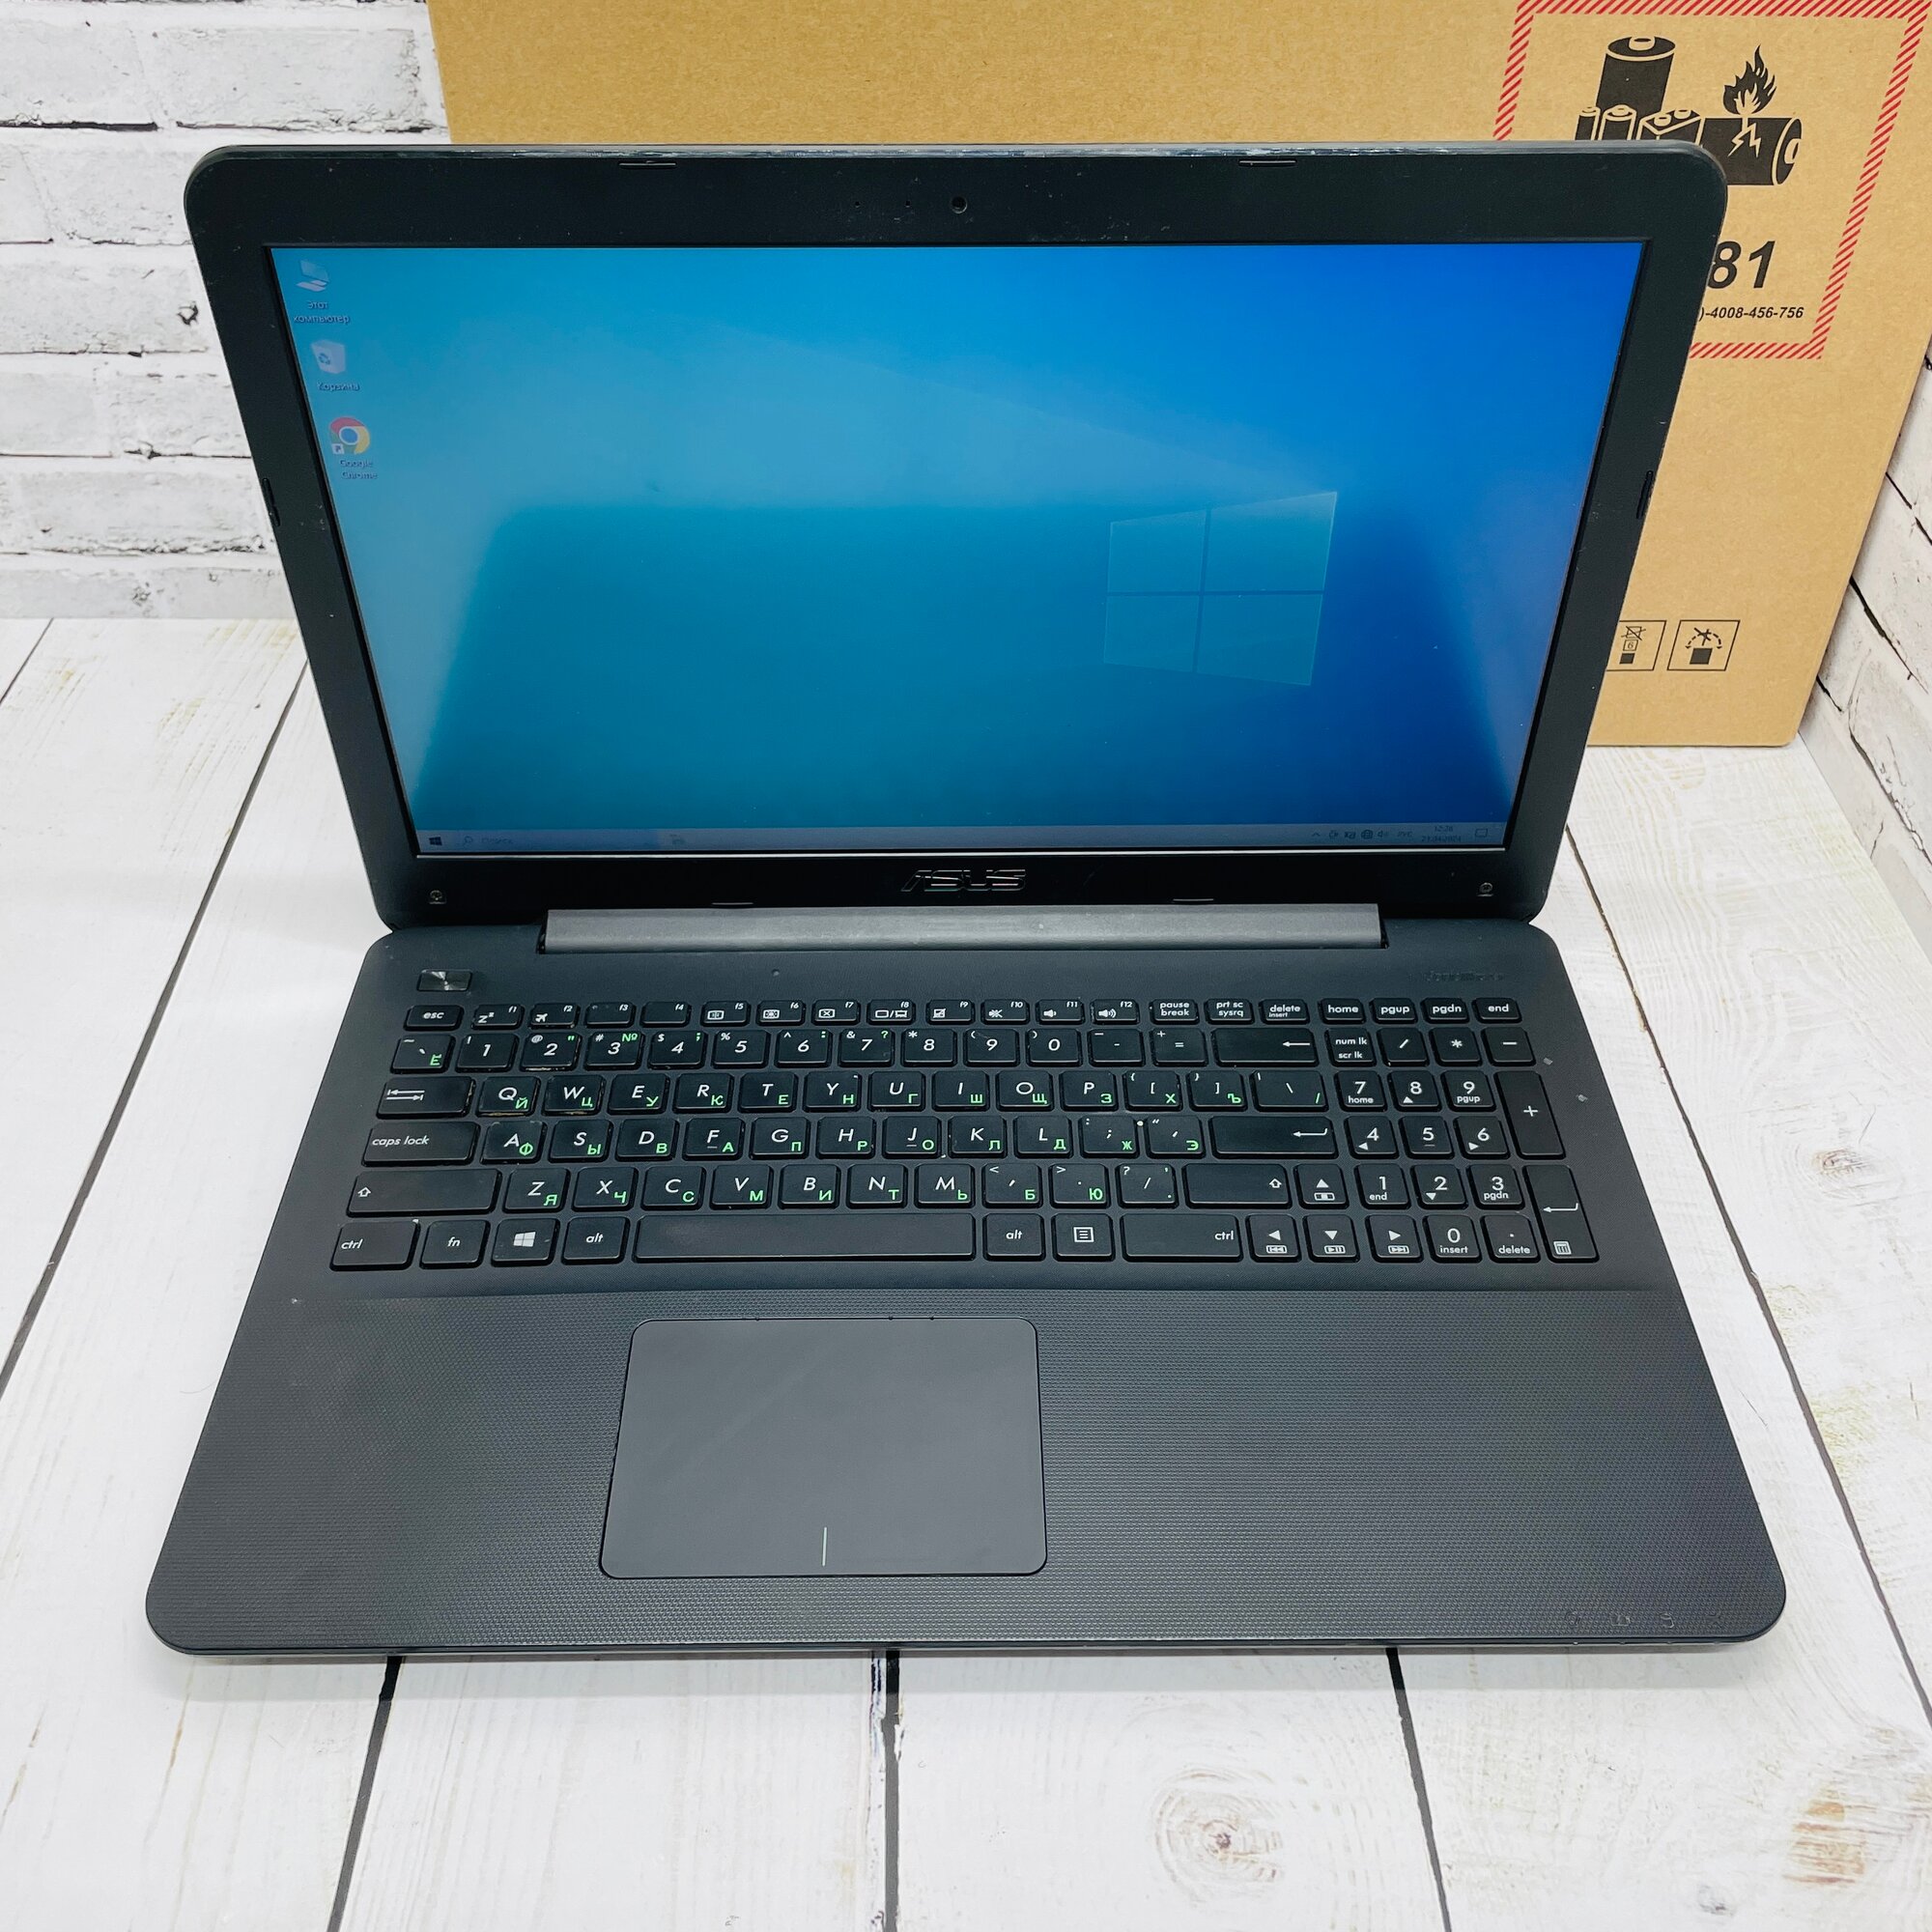 Игровой ноутбук Asus X555 - 15.6", AMD A10-8700P, 8Gb DDR3, 120Gb SSD, Radeon R6 M340DX